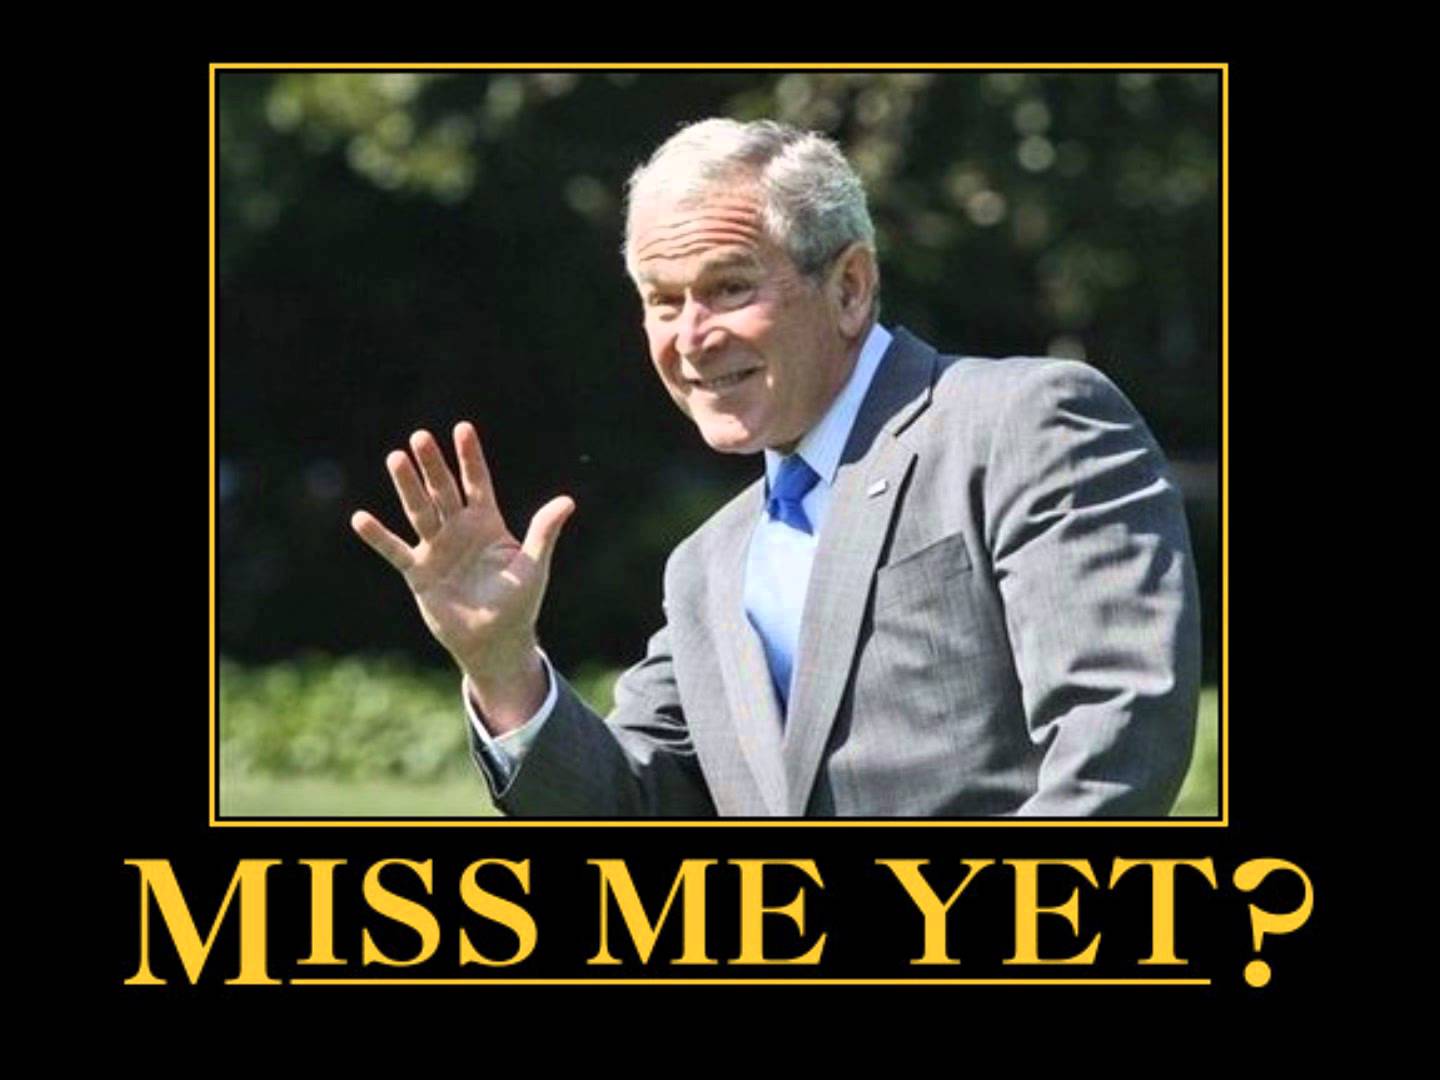 Funny-George-Bush-Meme-Miss-Me-Yet-Picture.jpg